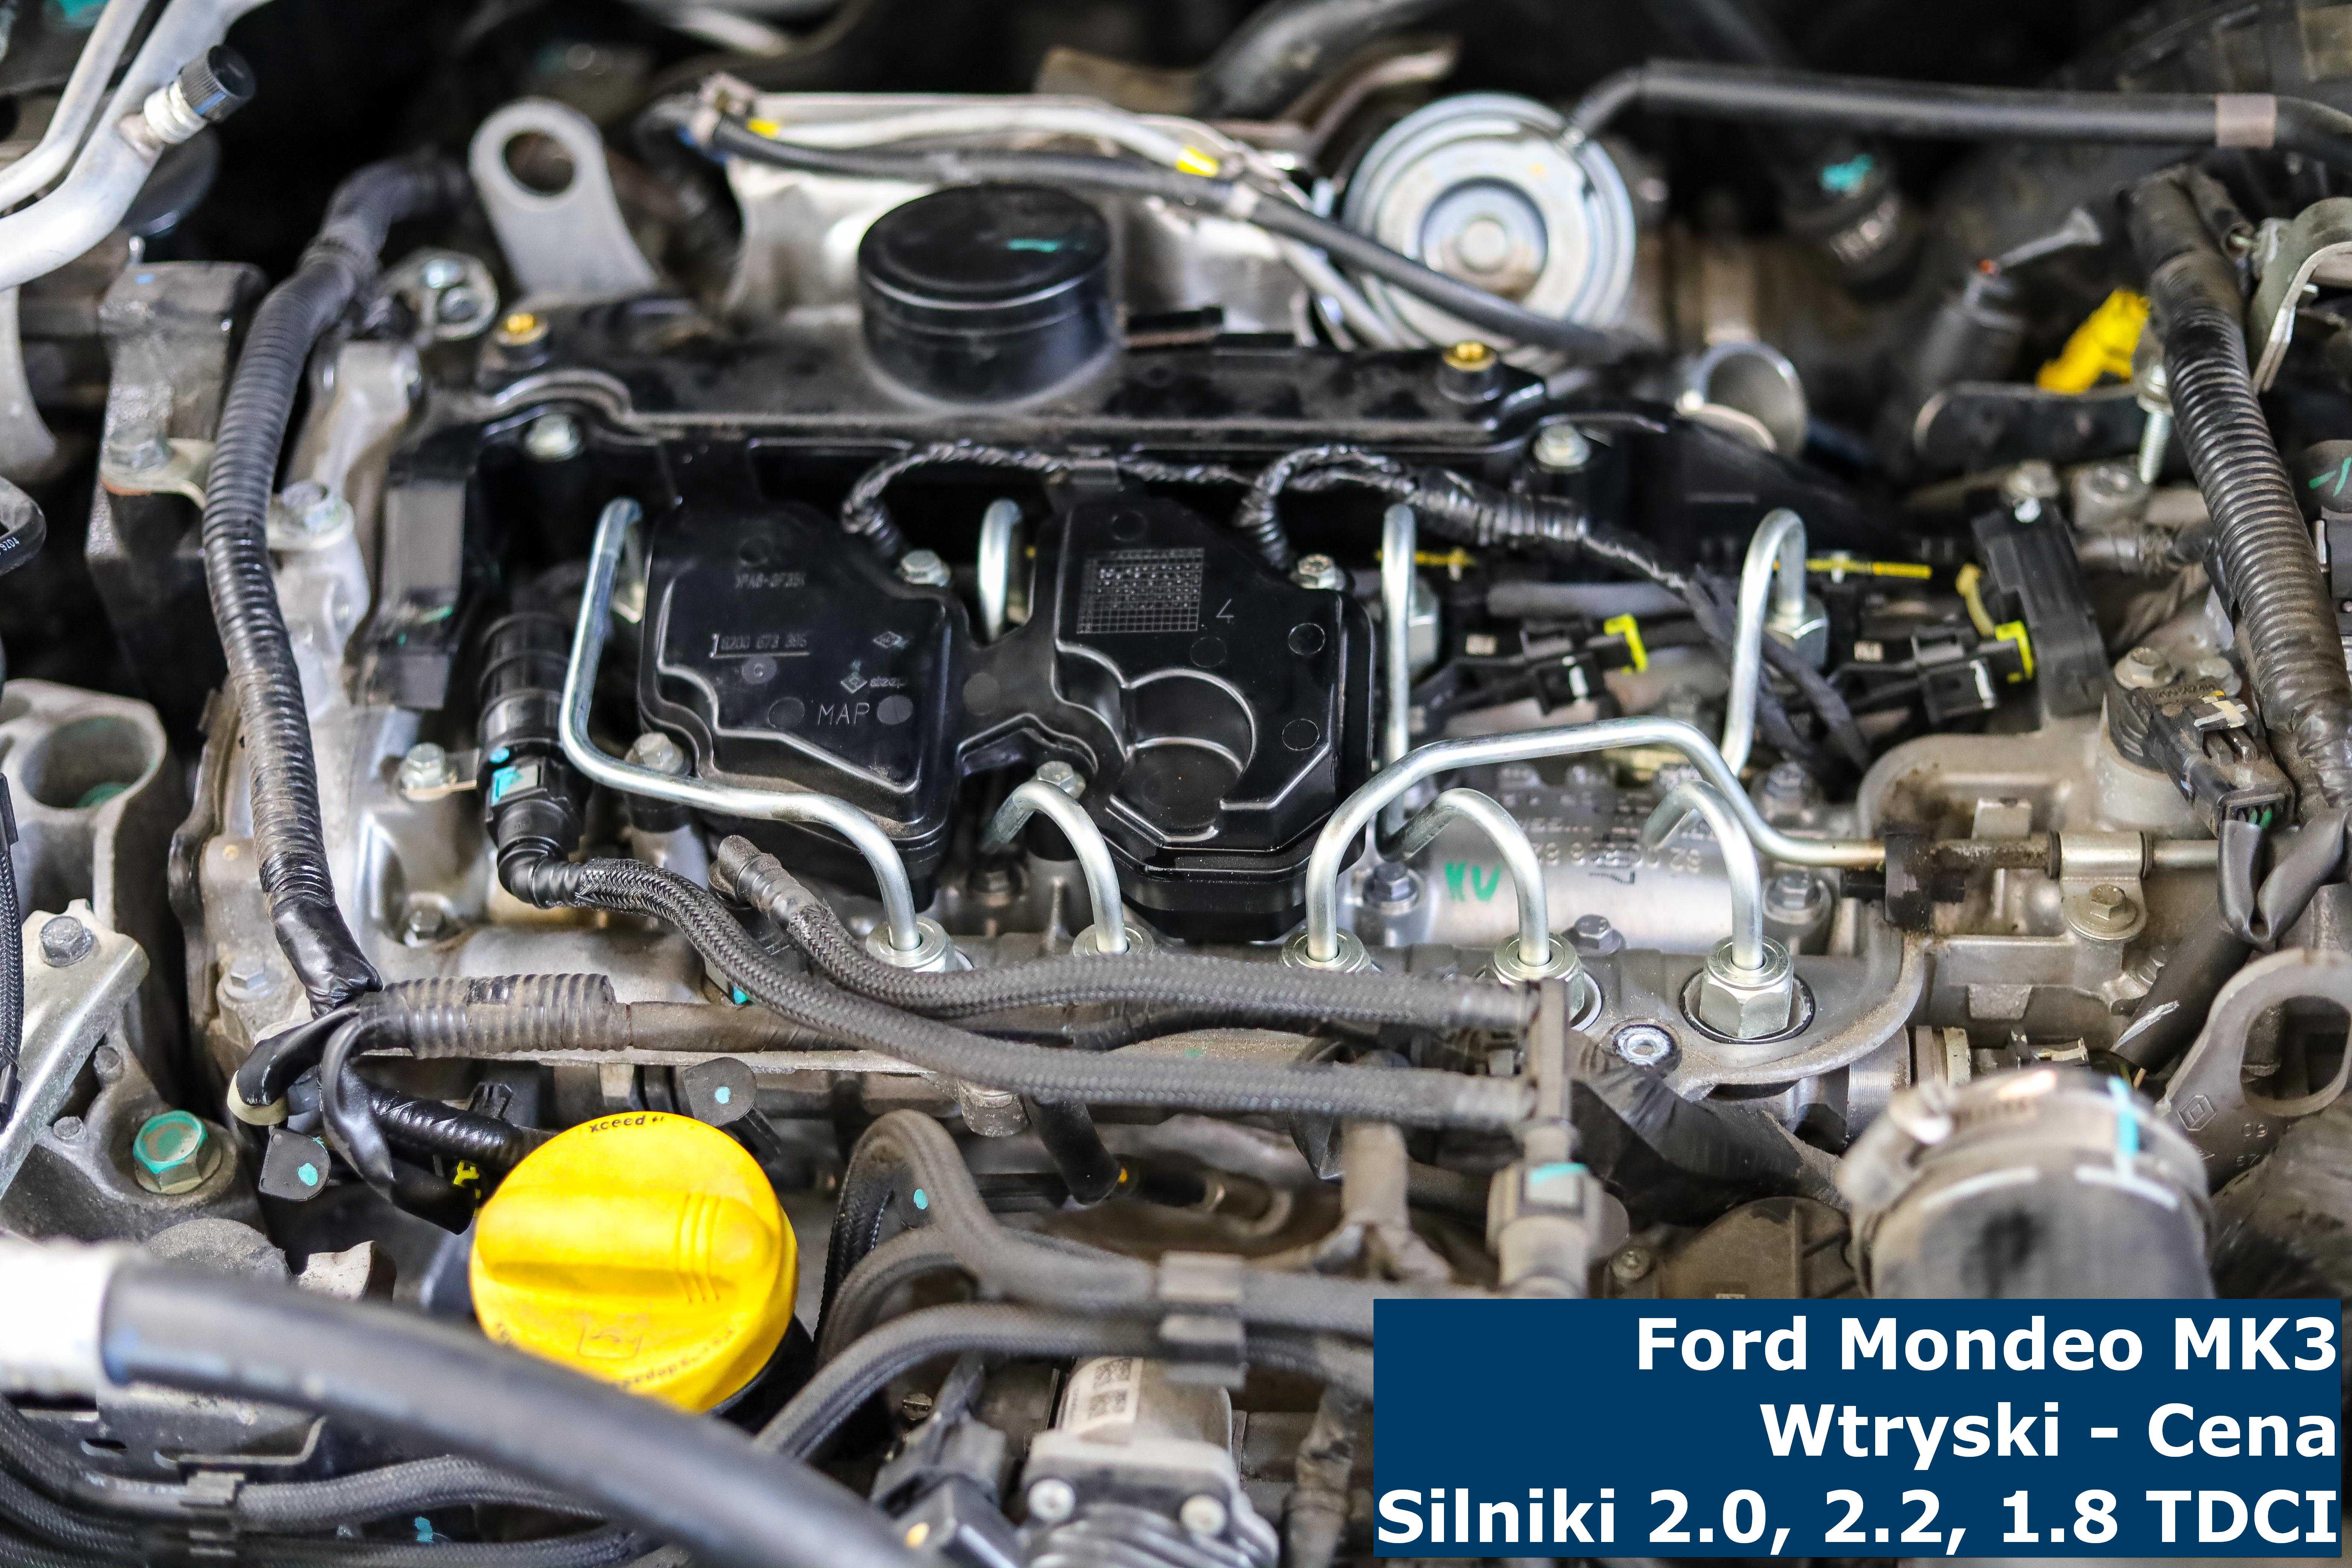 Ford Mondeo Mk3 – Wtryski - Cena. Silniki 2.0, 2.2, 1.8 Tdci